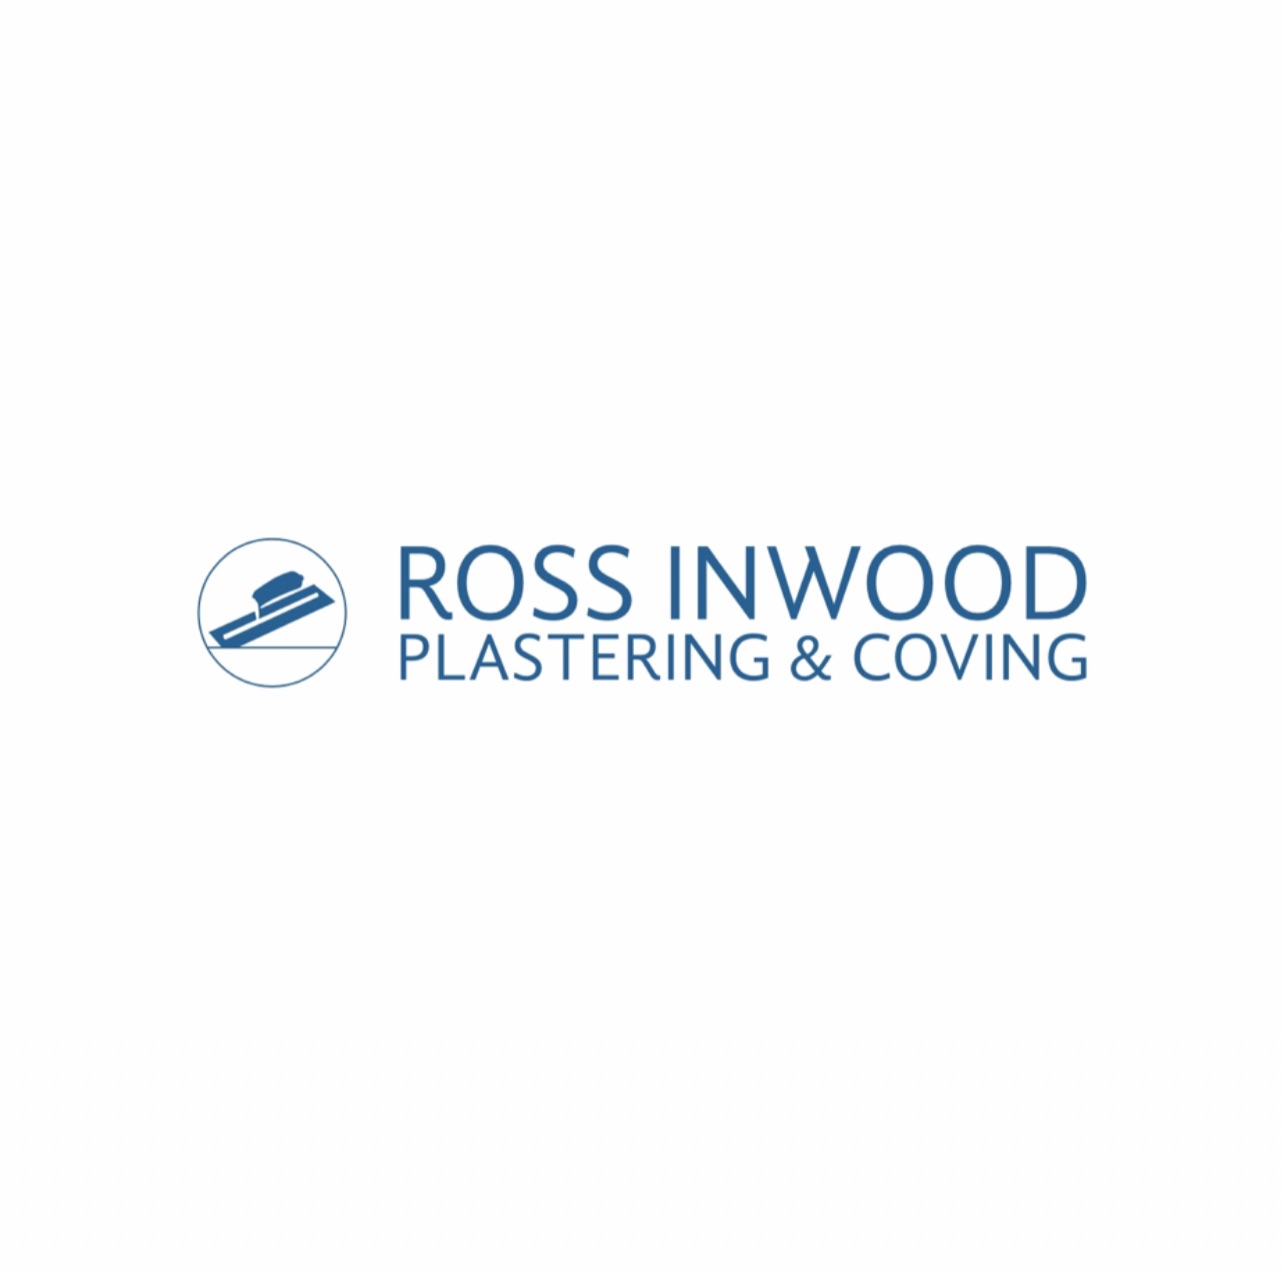 Ross Inwood plastering & Coving